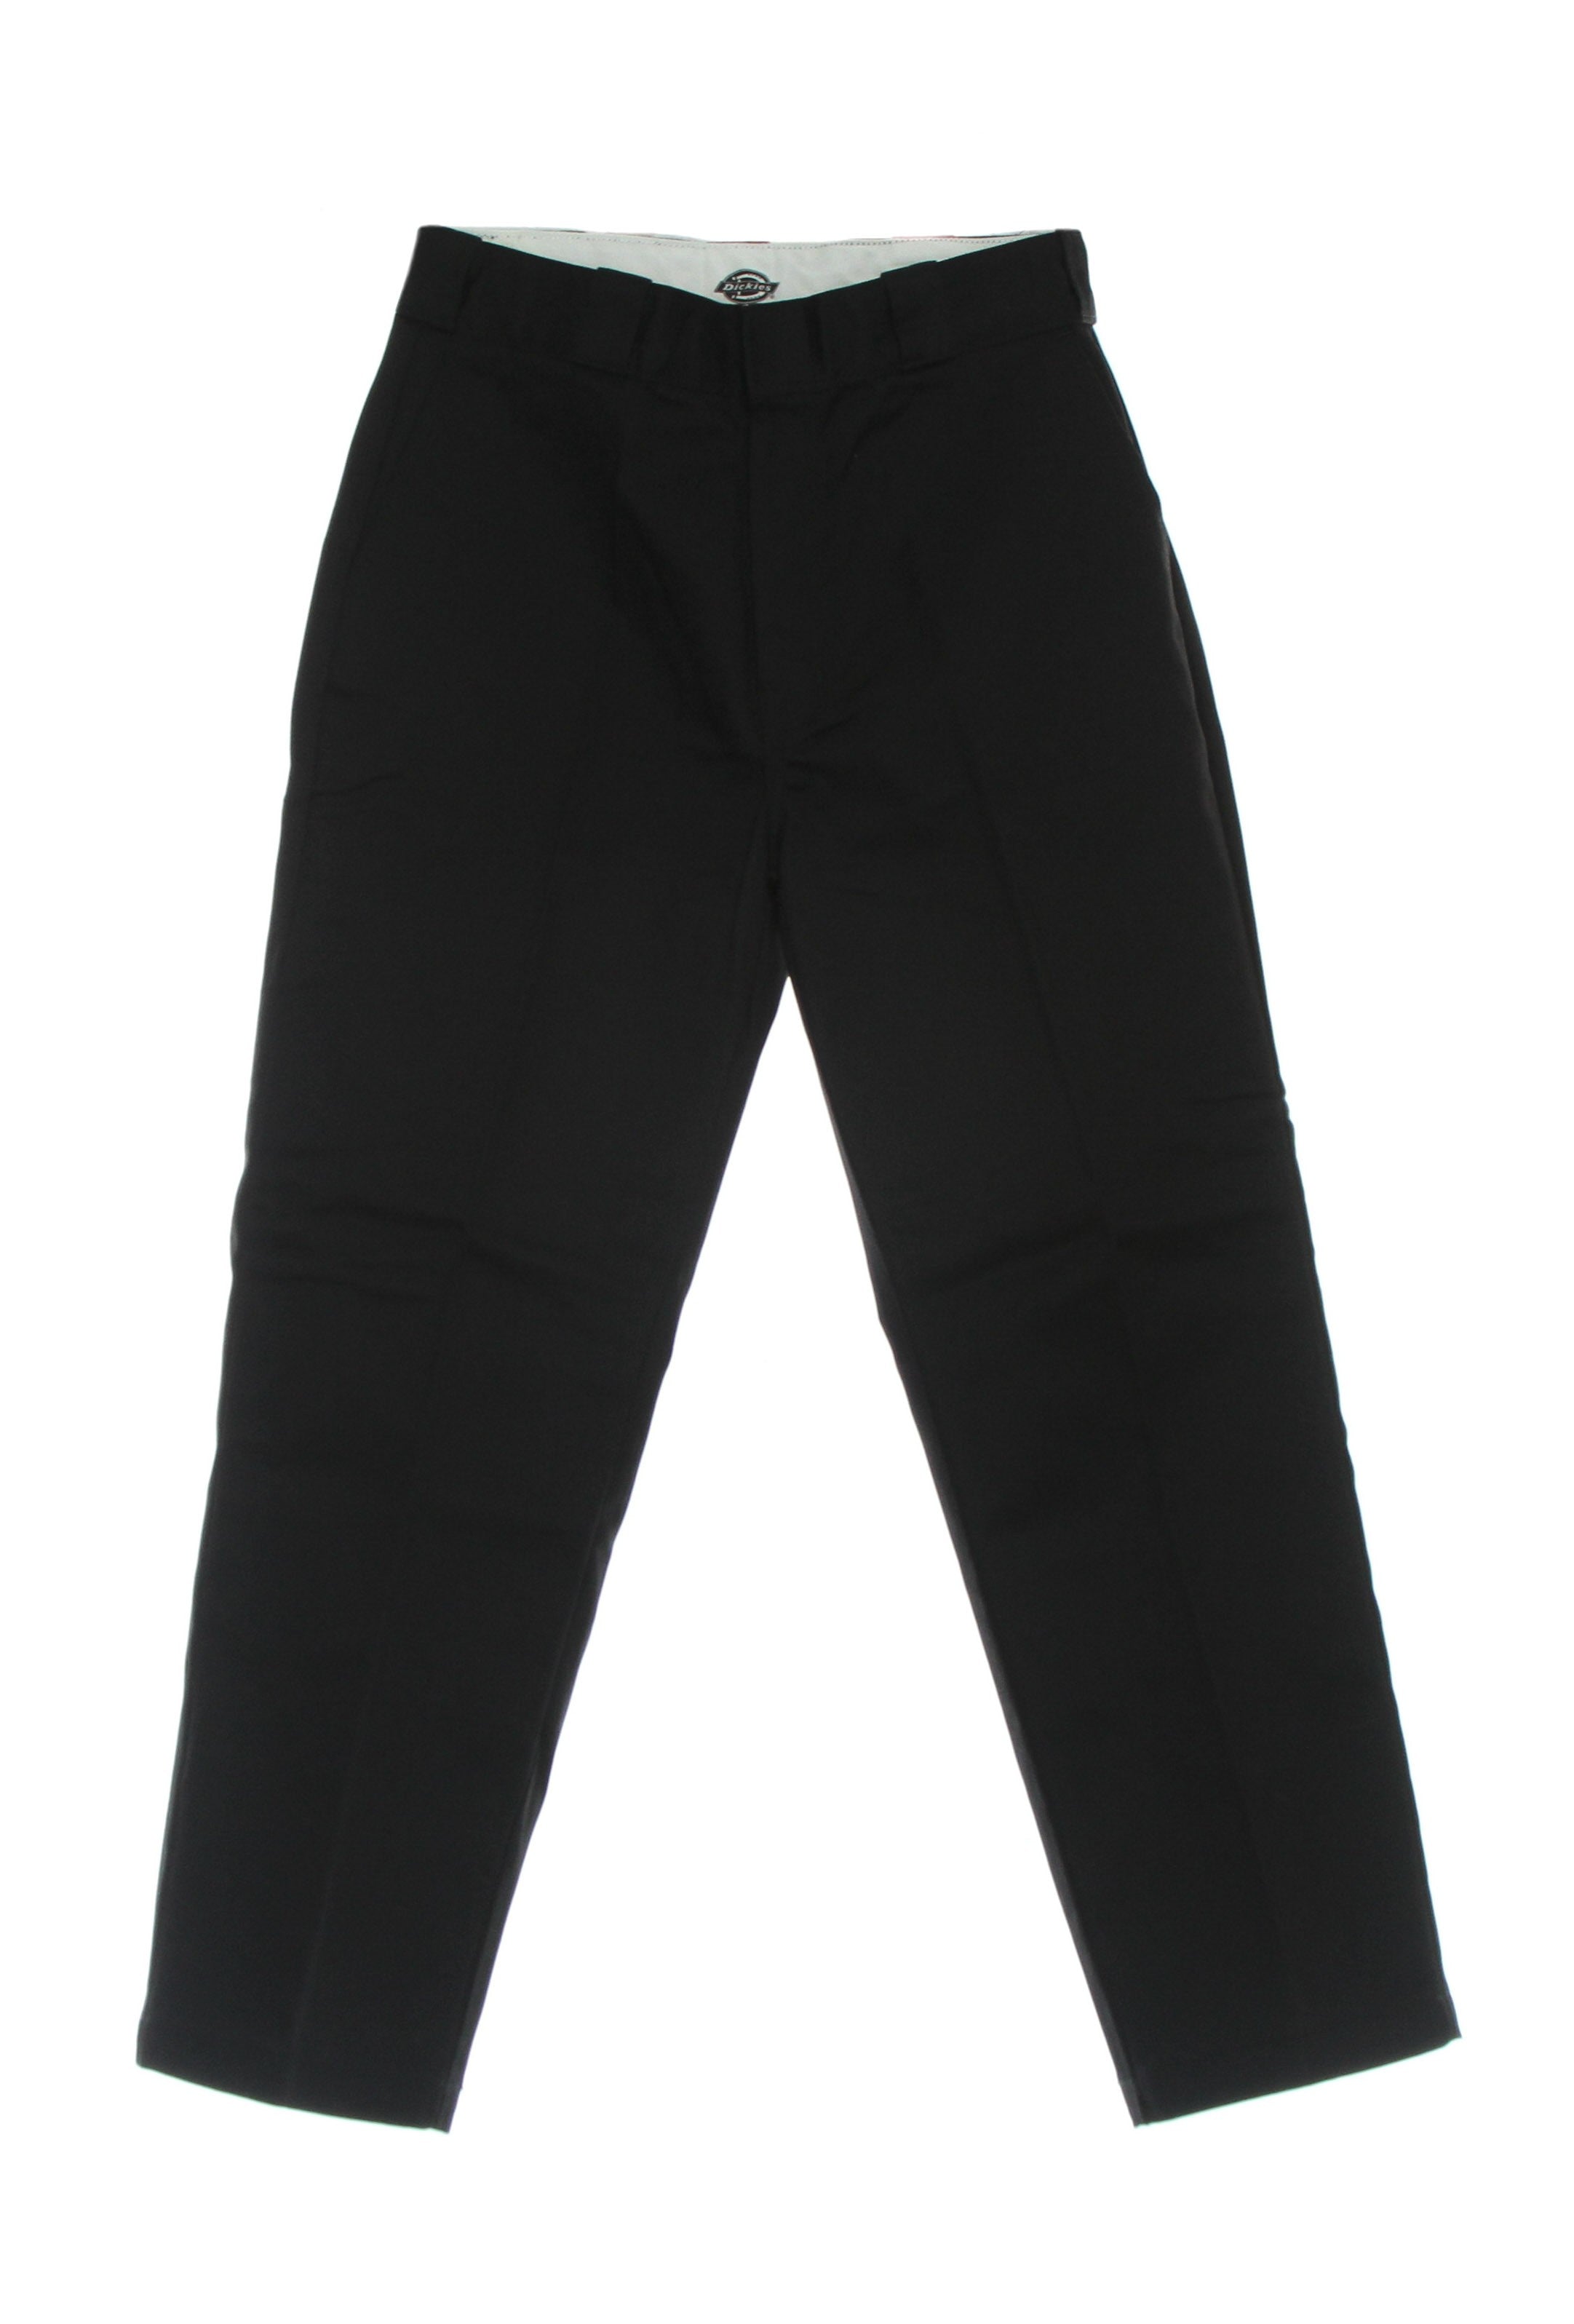 Pantalone Lungo Donna 874 Cropped Rec Black